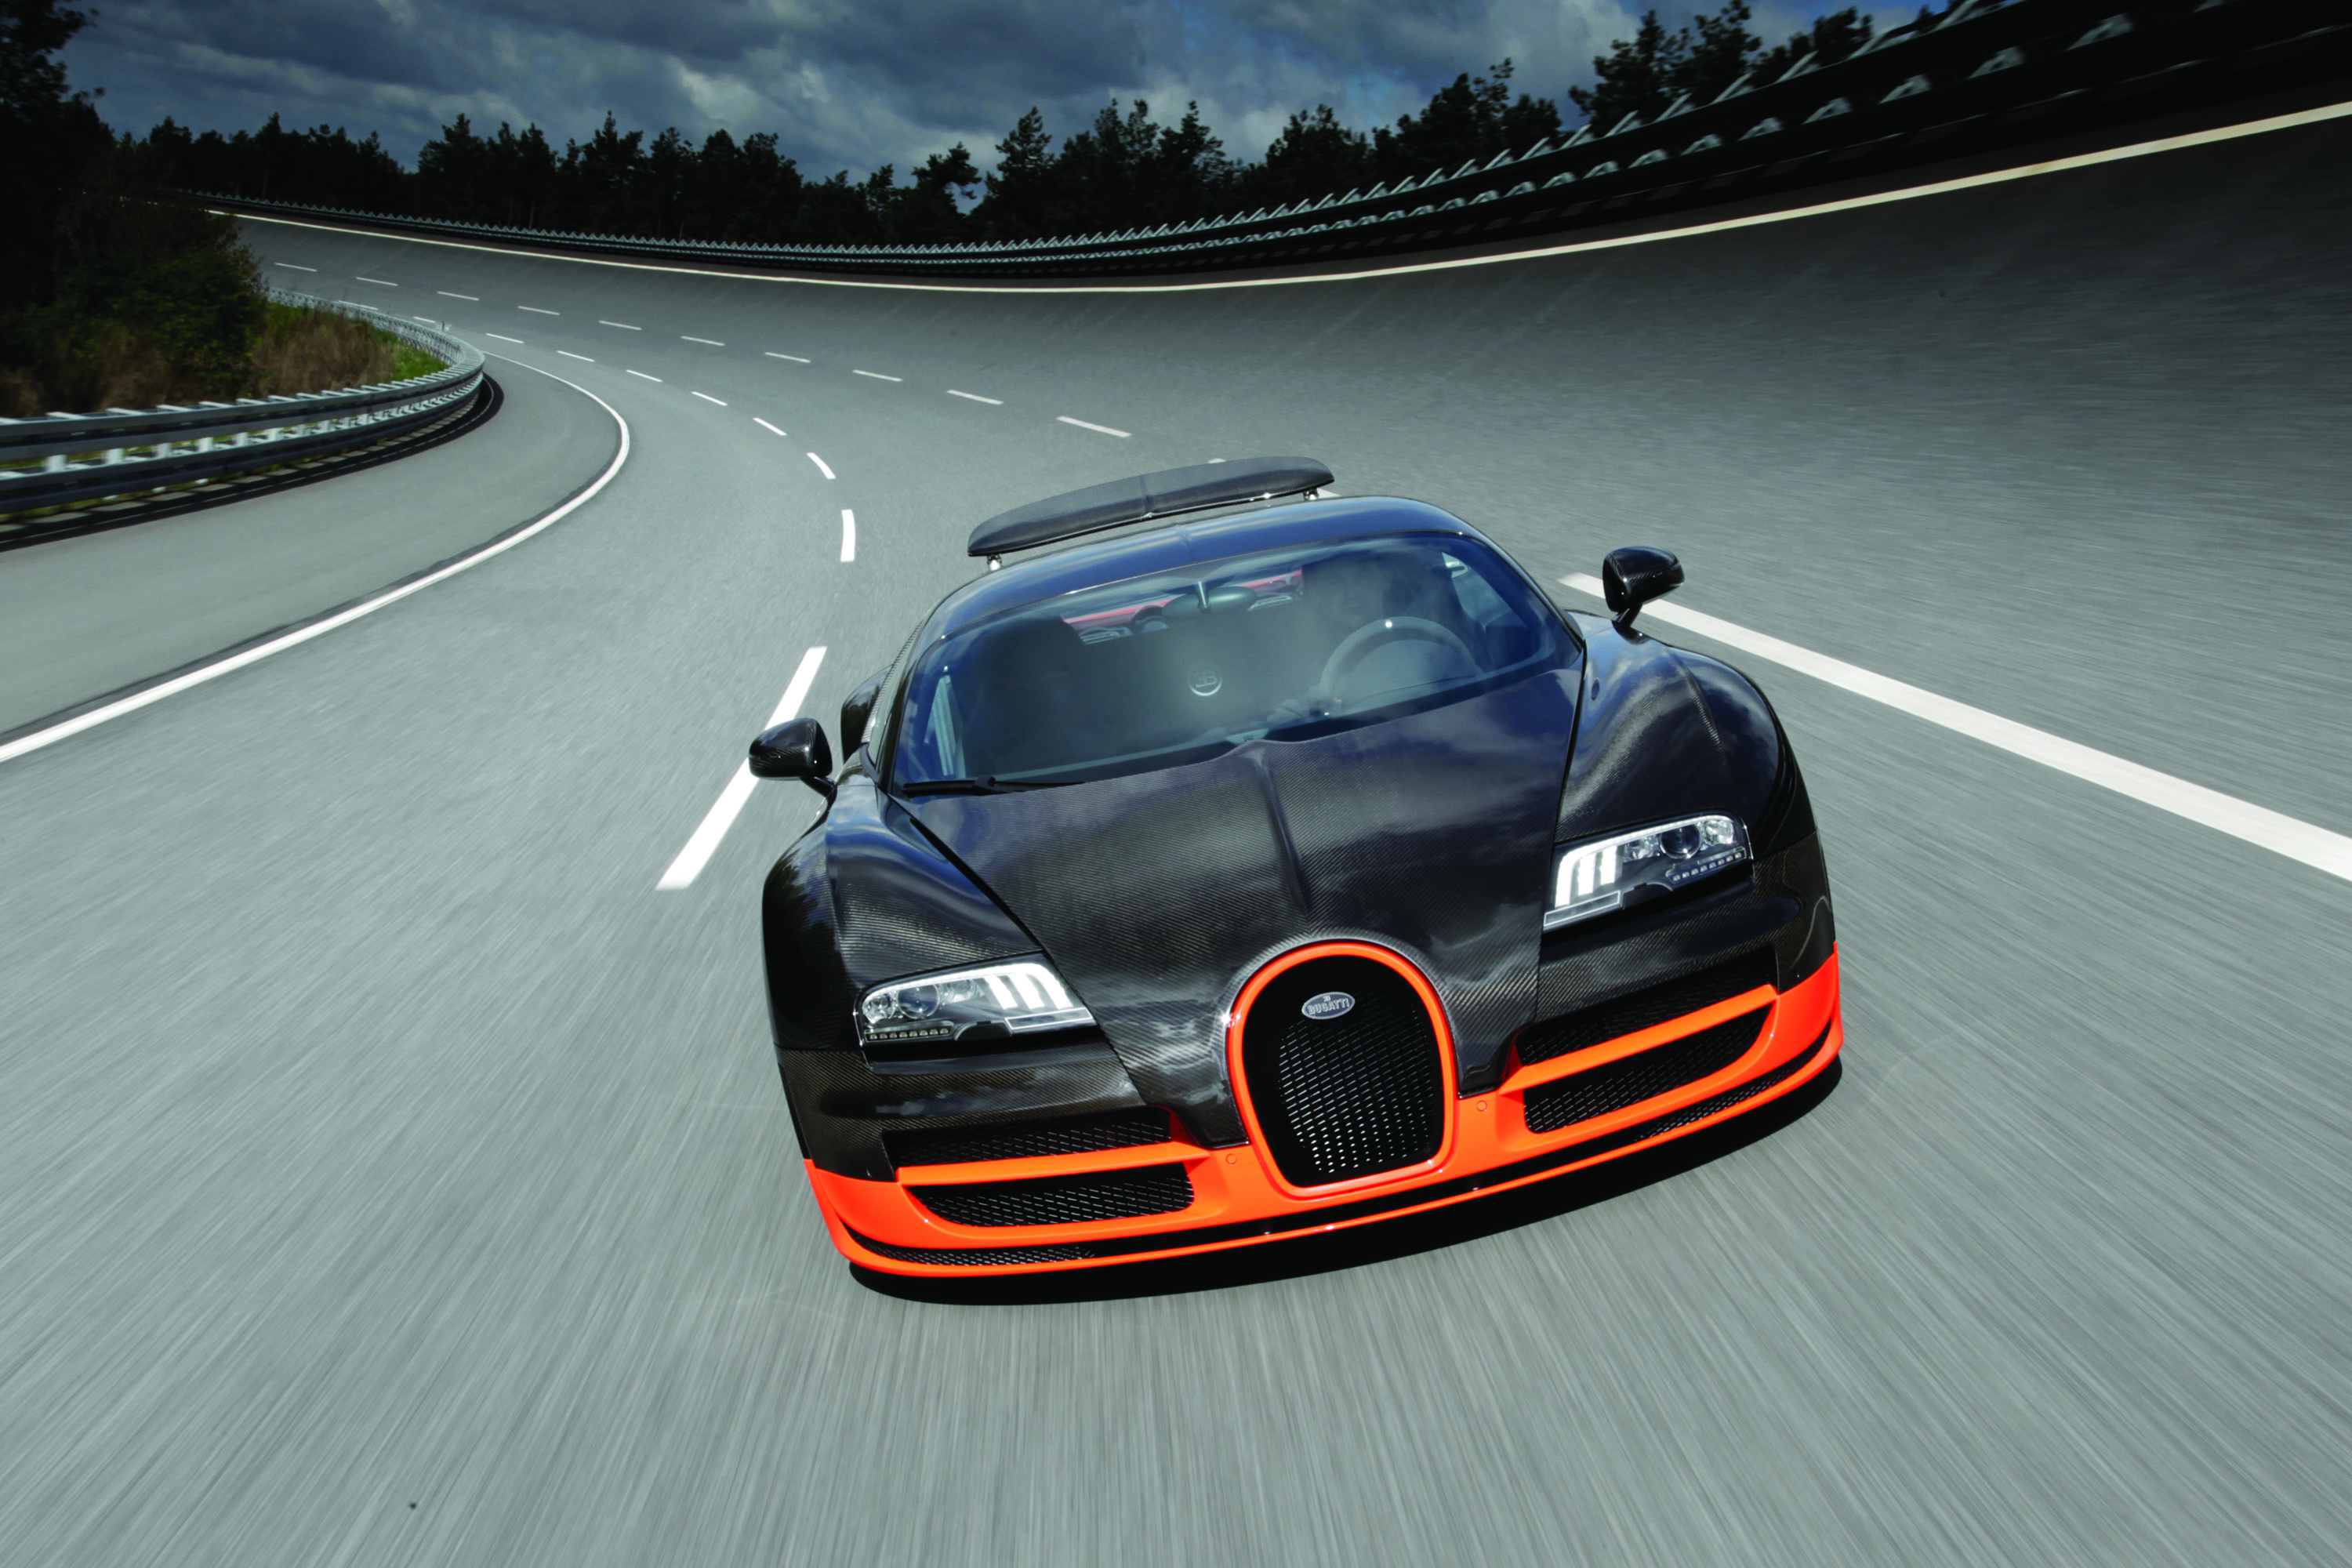 Как быть самой быстрой. Bugatti Veyron 16.4 super Sport 2010. Машина Bugatti Veyron 16.4 Supersport. Машина Bugatti Veyron super Sport. Бугатти Вейрон 2010.